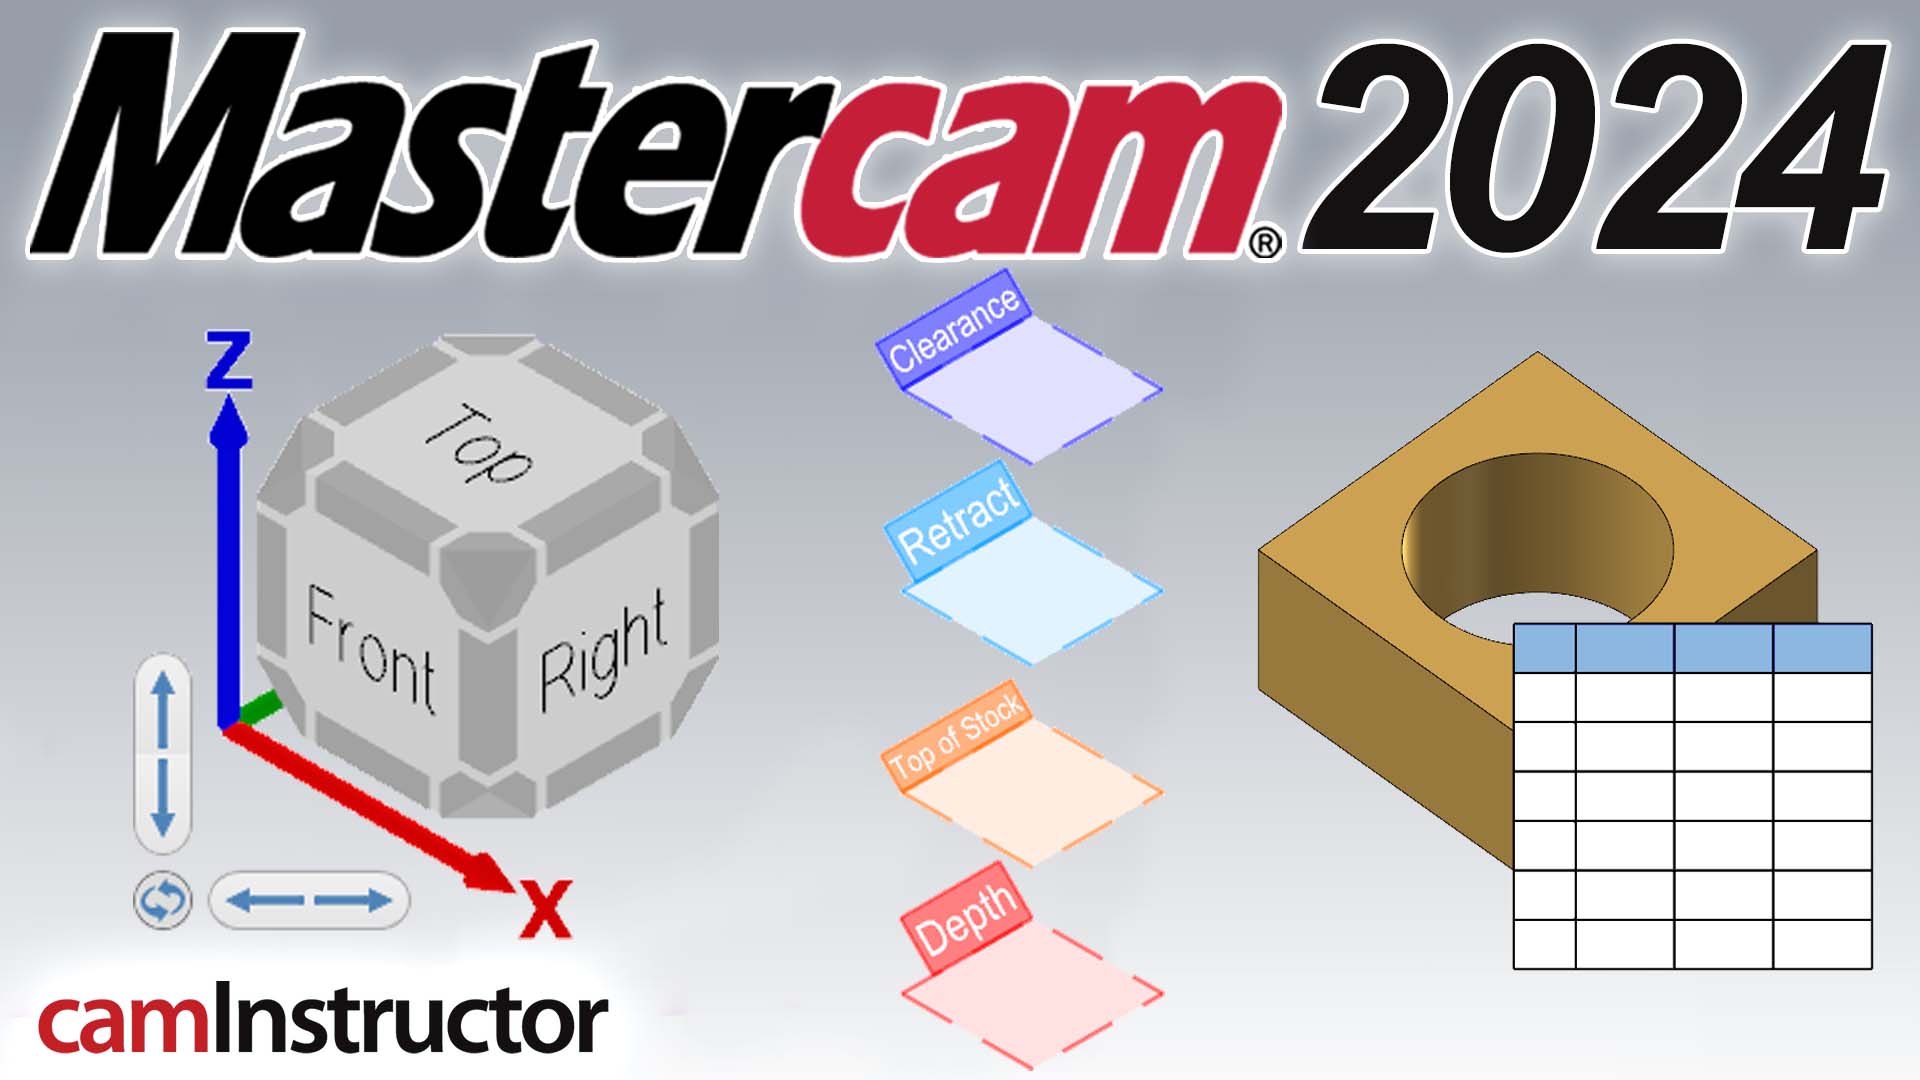 Mastercam 2024 is HERE!